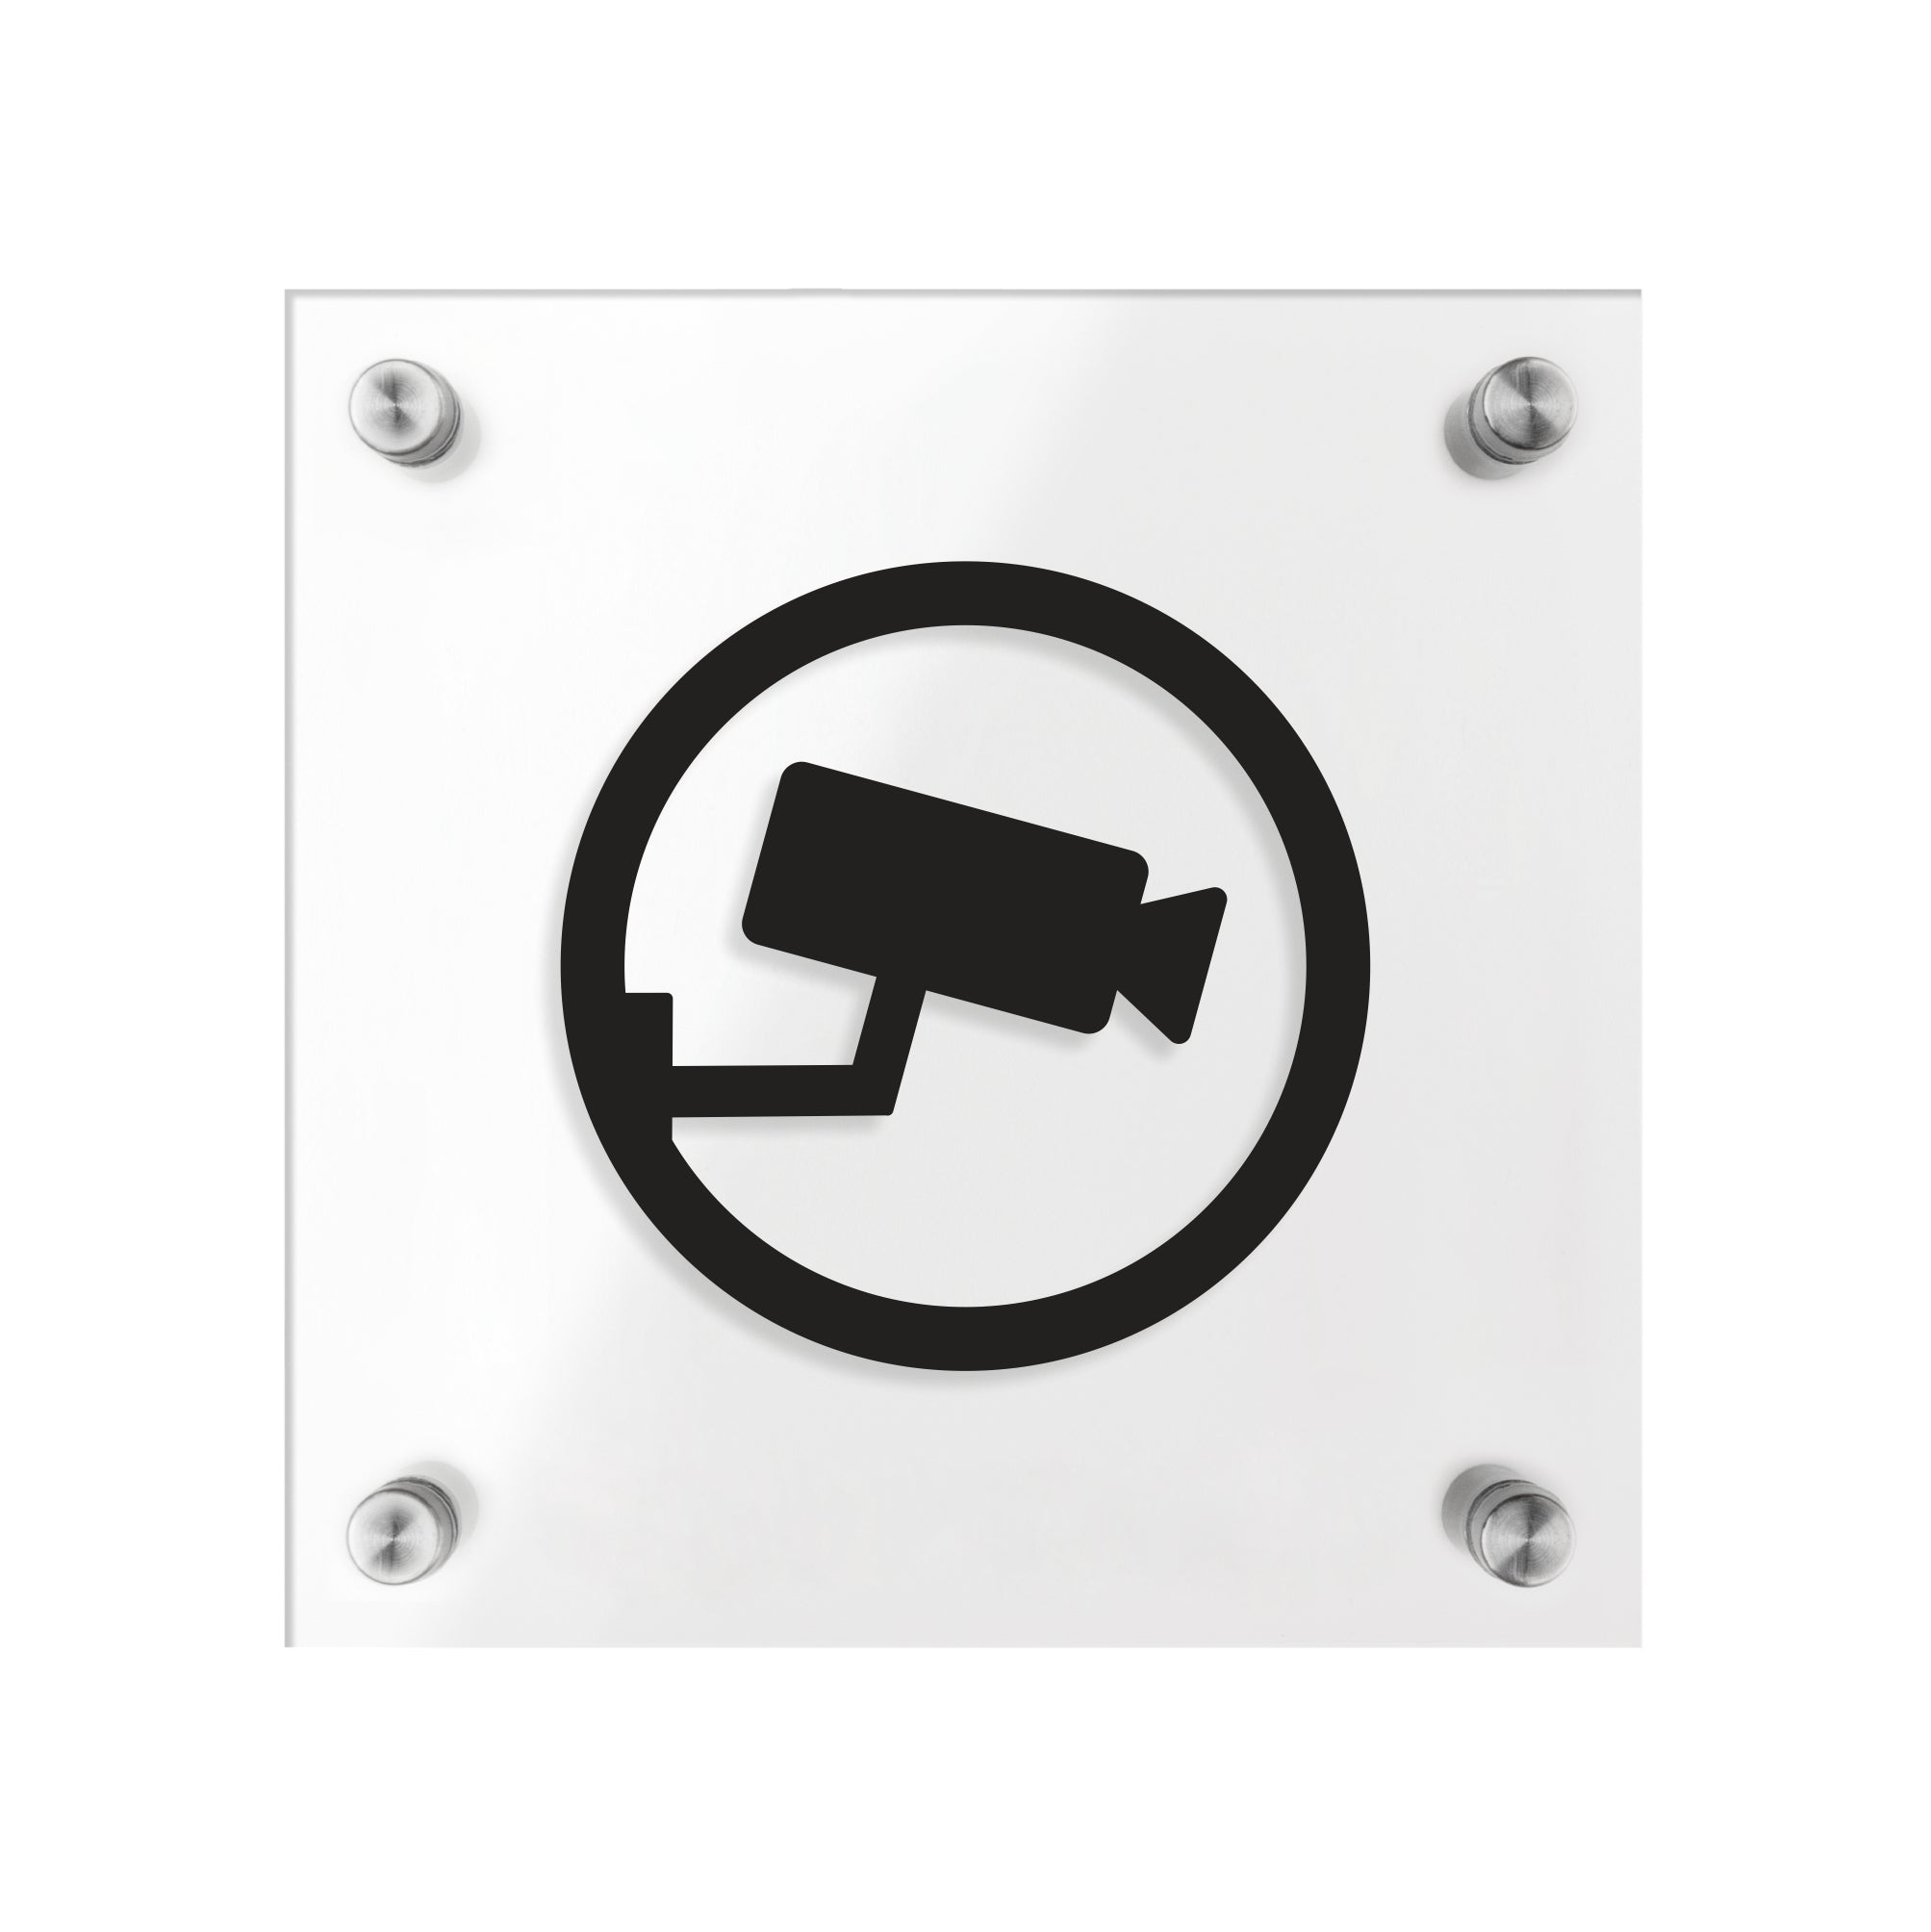 video surveillance camera icon